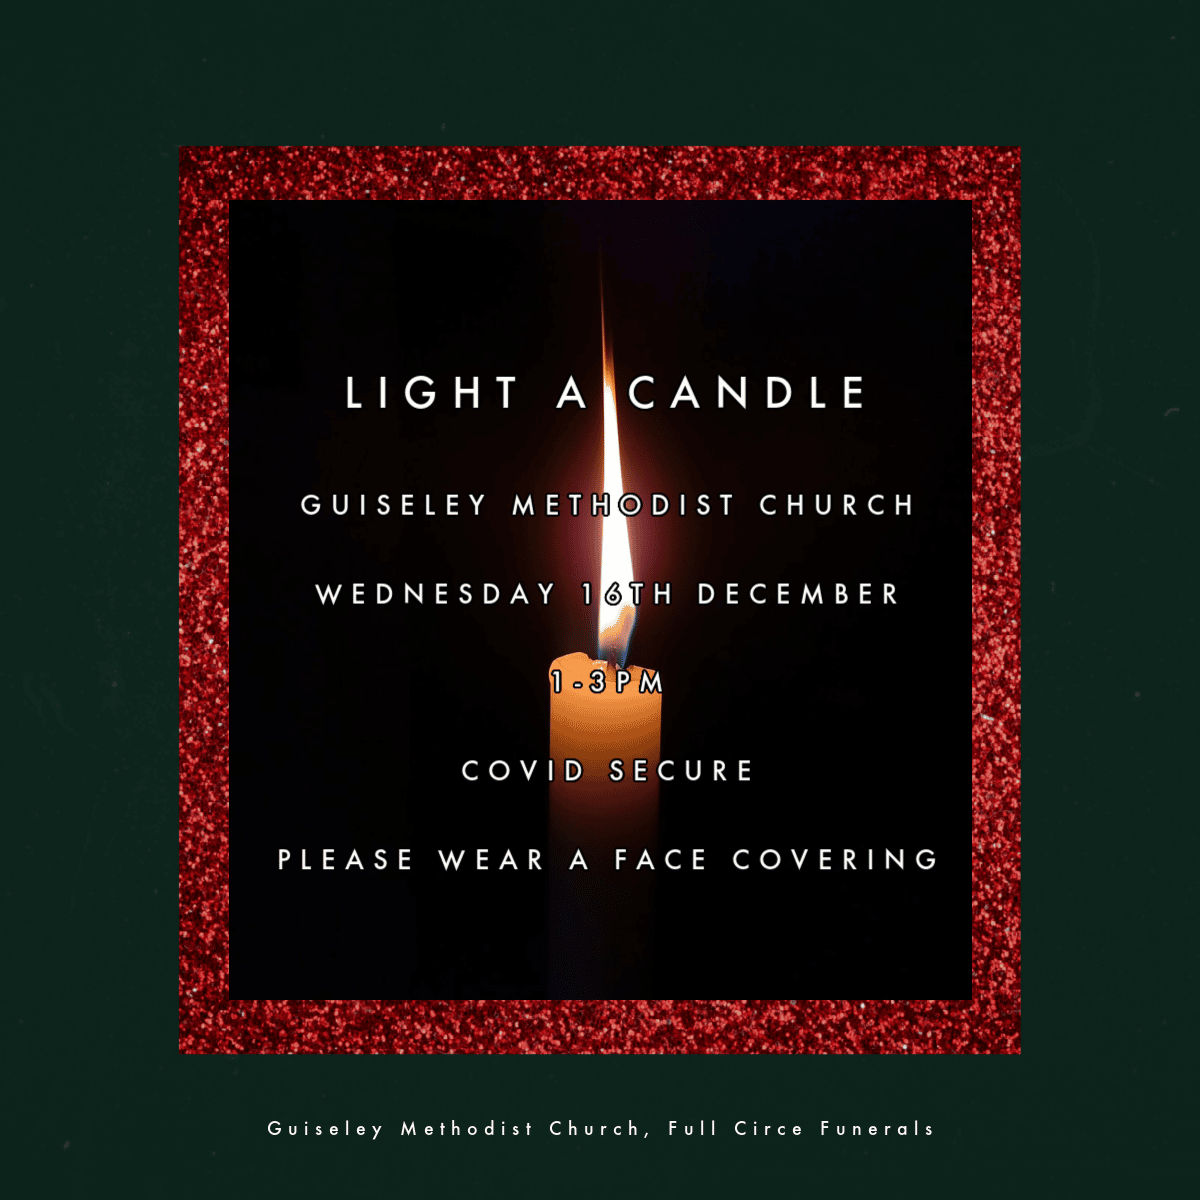 Light a candle invite